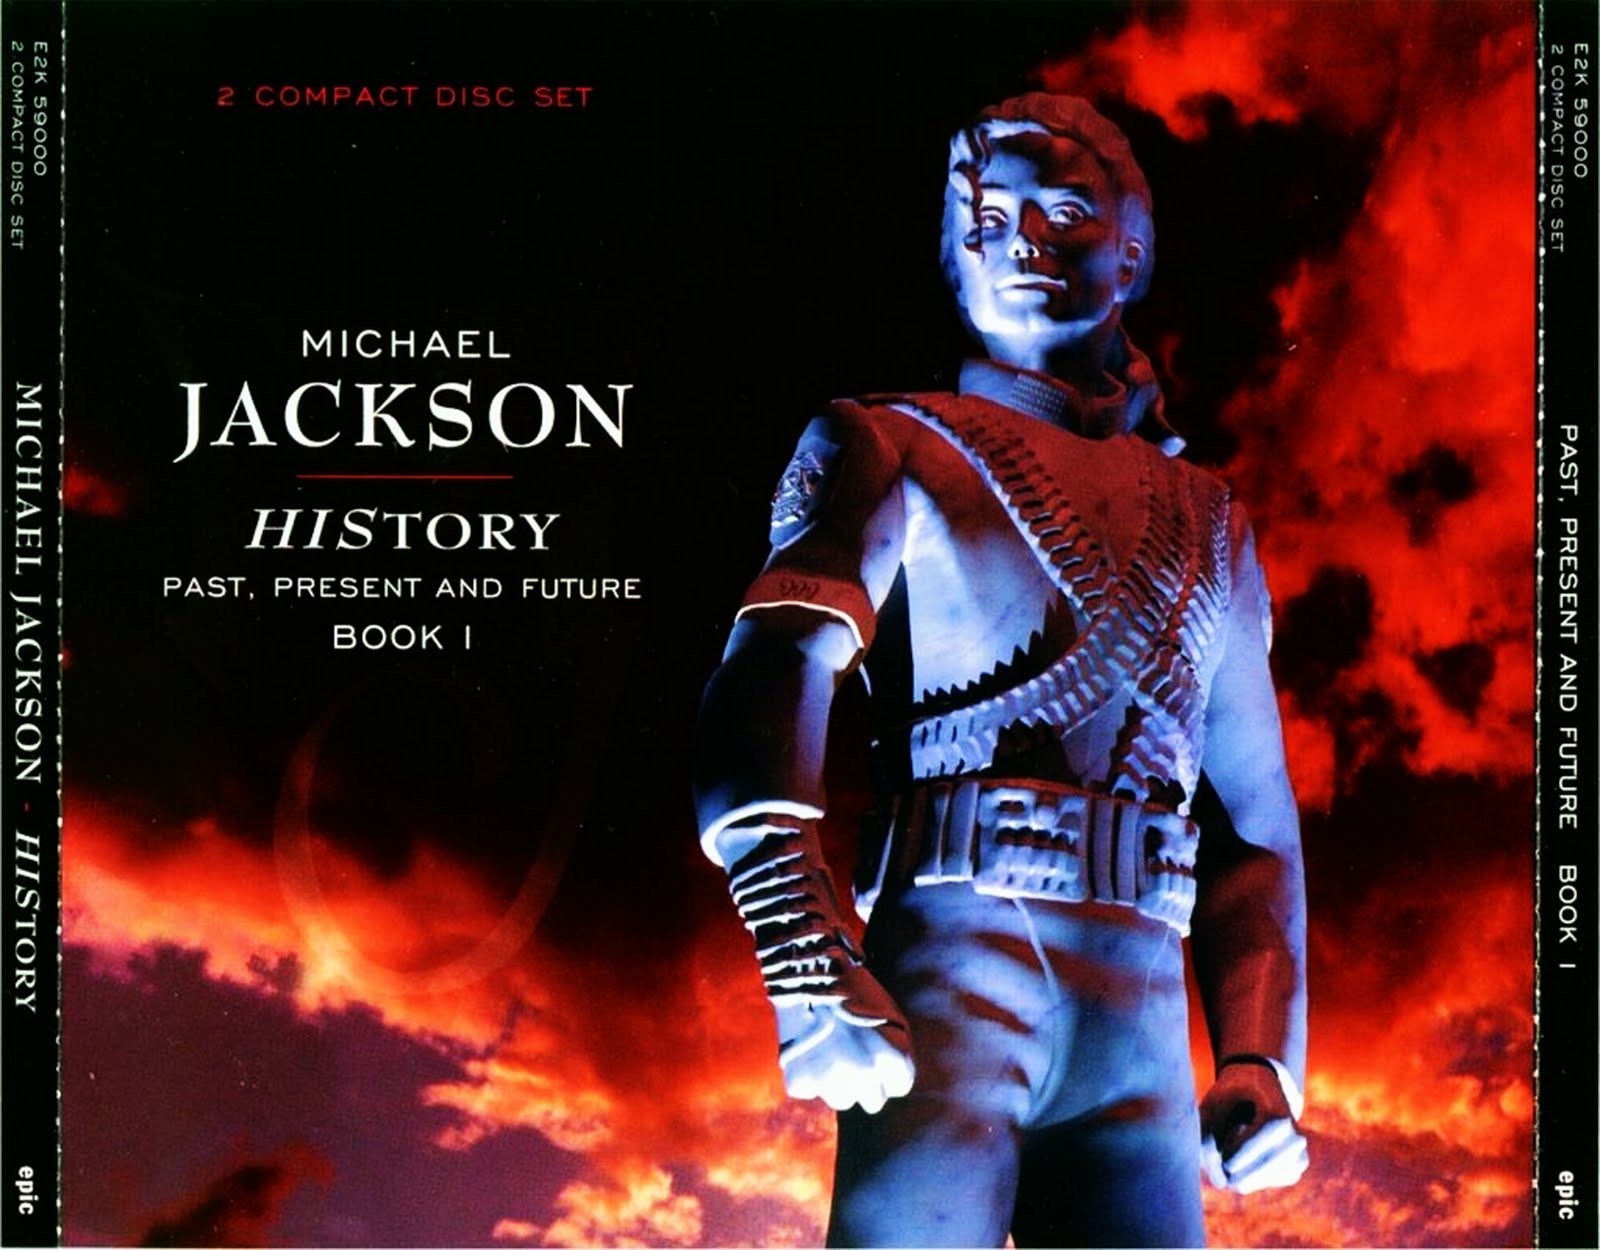 http://1.bp.blogspot.com/_f2iAGRf_Ioo/TJEs5UKE-pI/AAAAAAAABl4/-iX-vEgj4Xc/s1600/000.+Michael+Jackson+-+History,+Book+I+-+Front.jpg